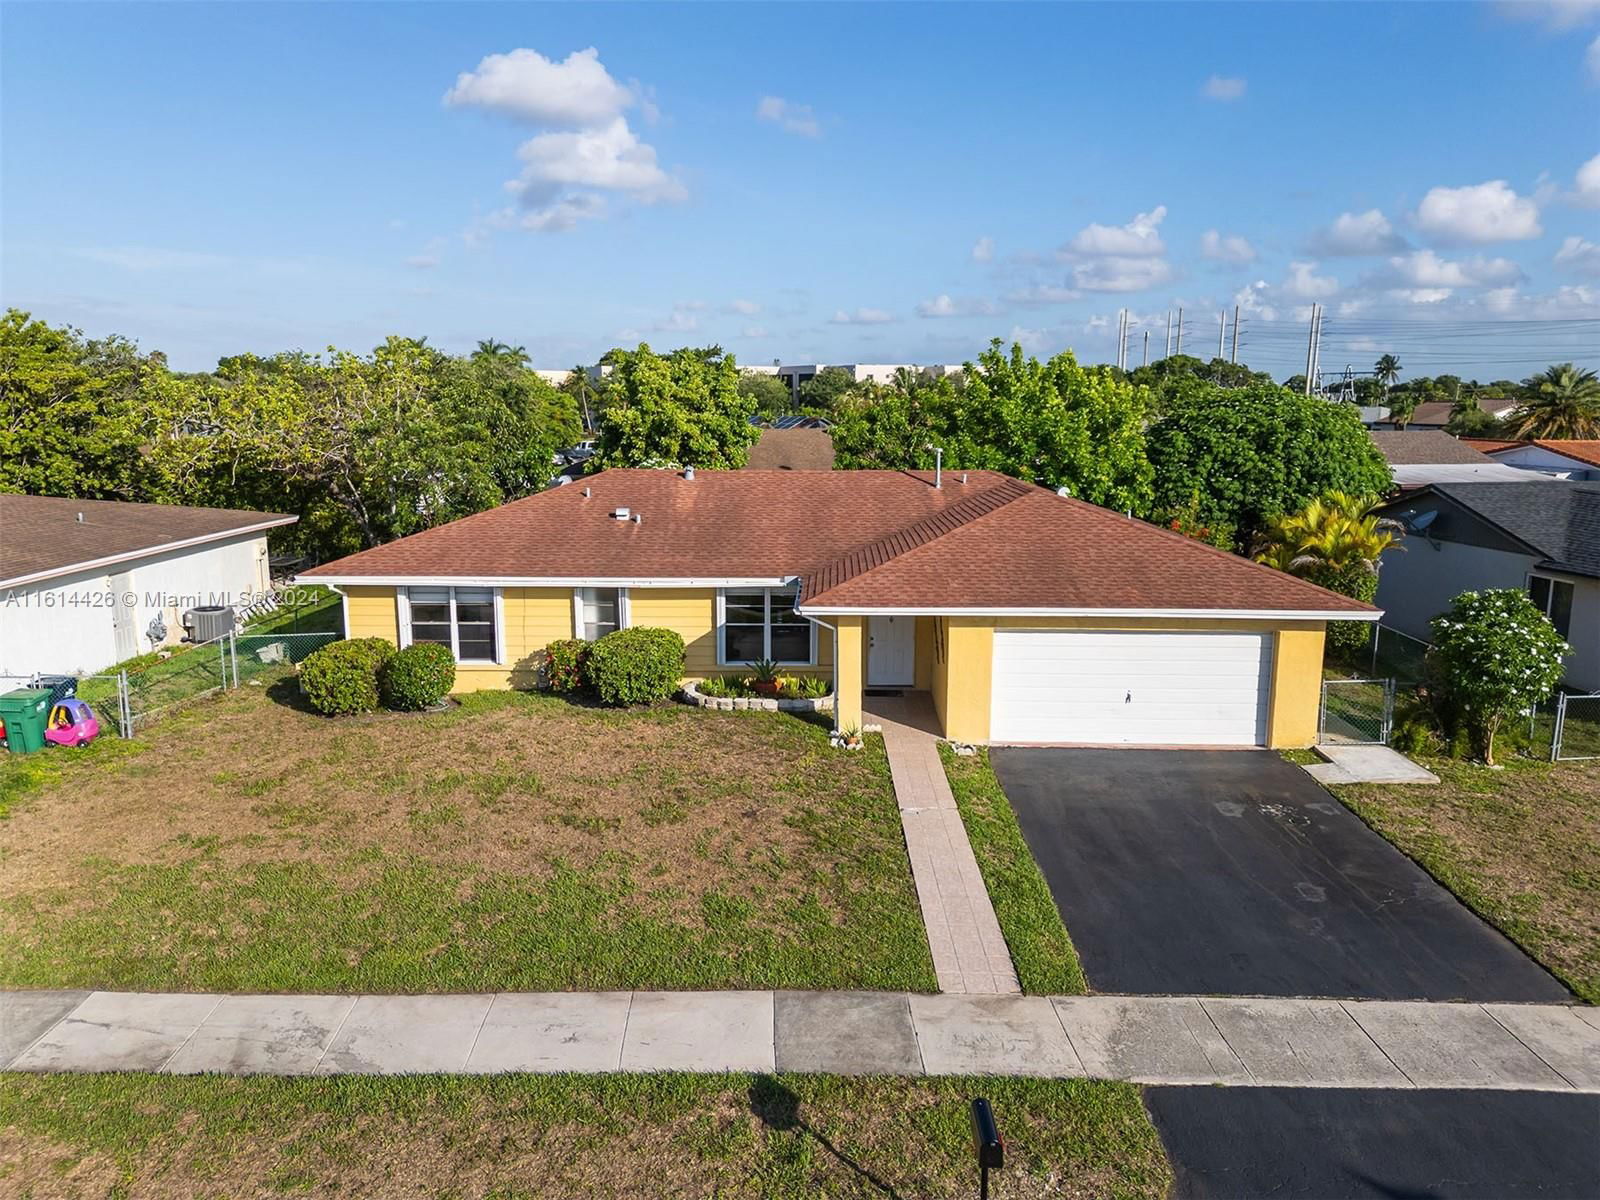 Real estate property located at 13234 85th Ter, Miami-Dade County, WINSTON PARK UNIT 8, Miami, FL